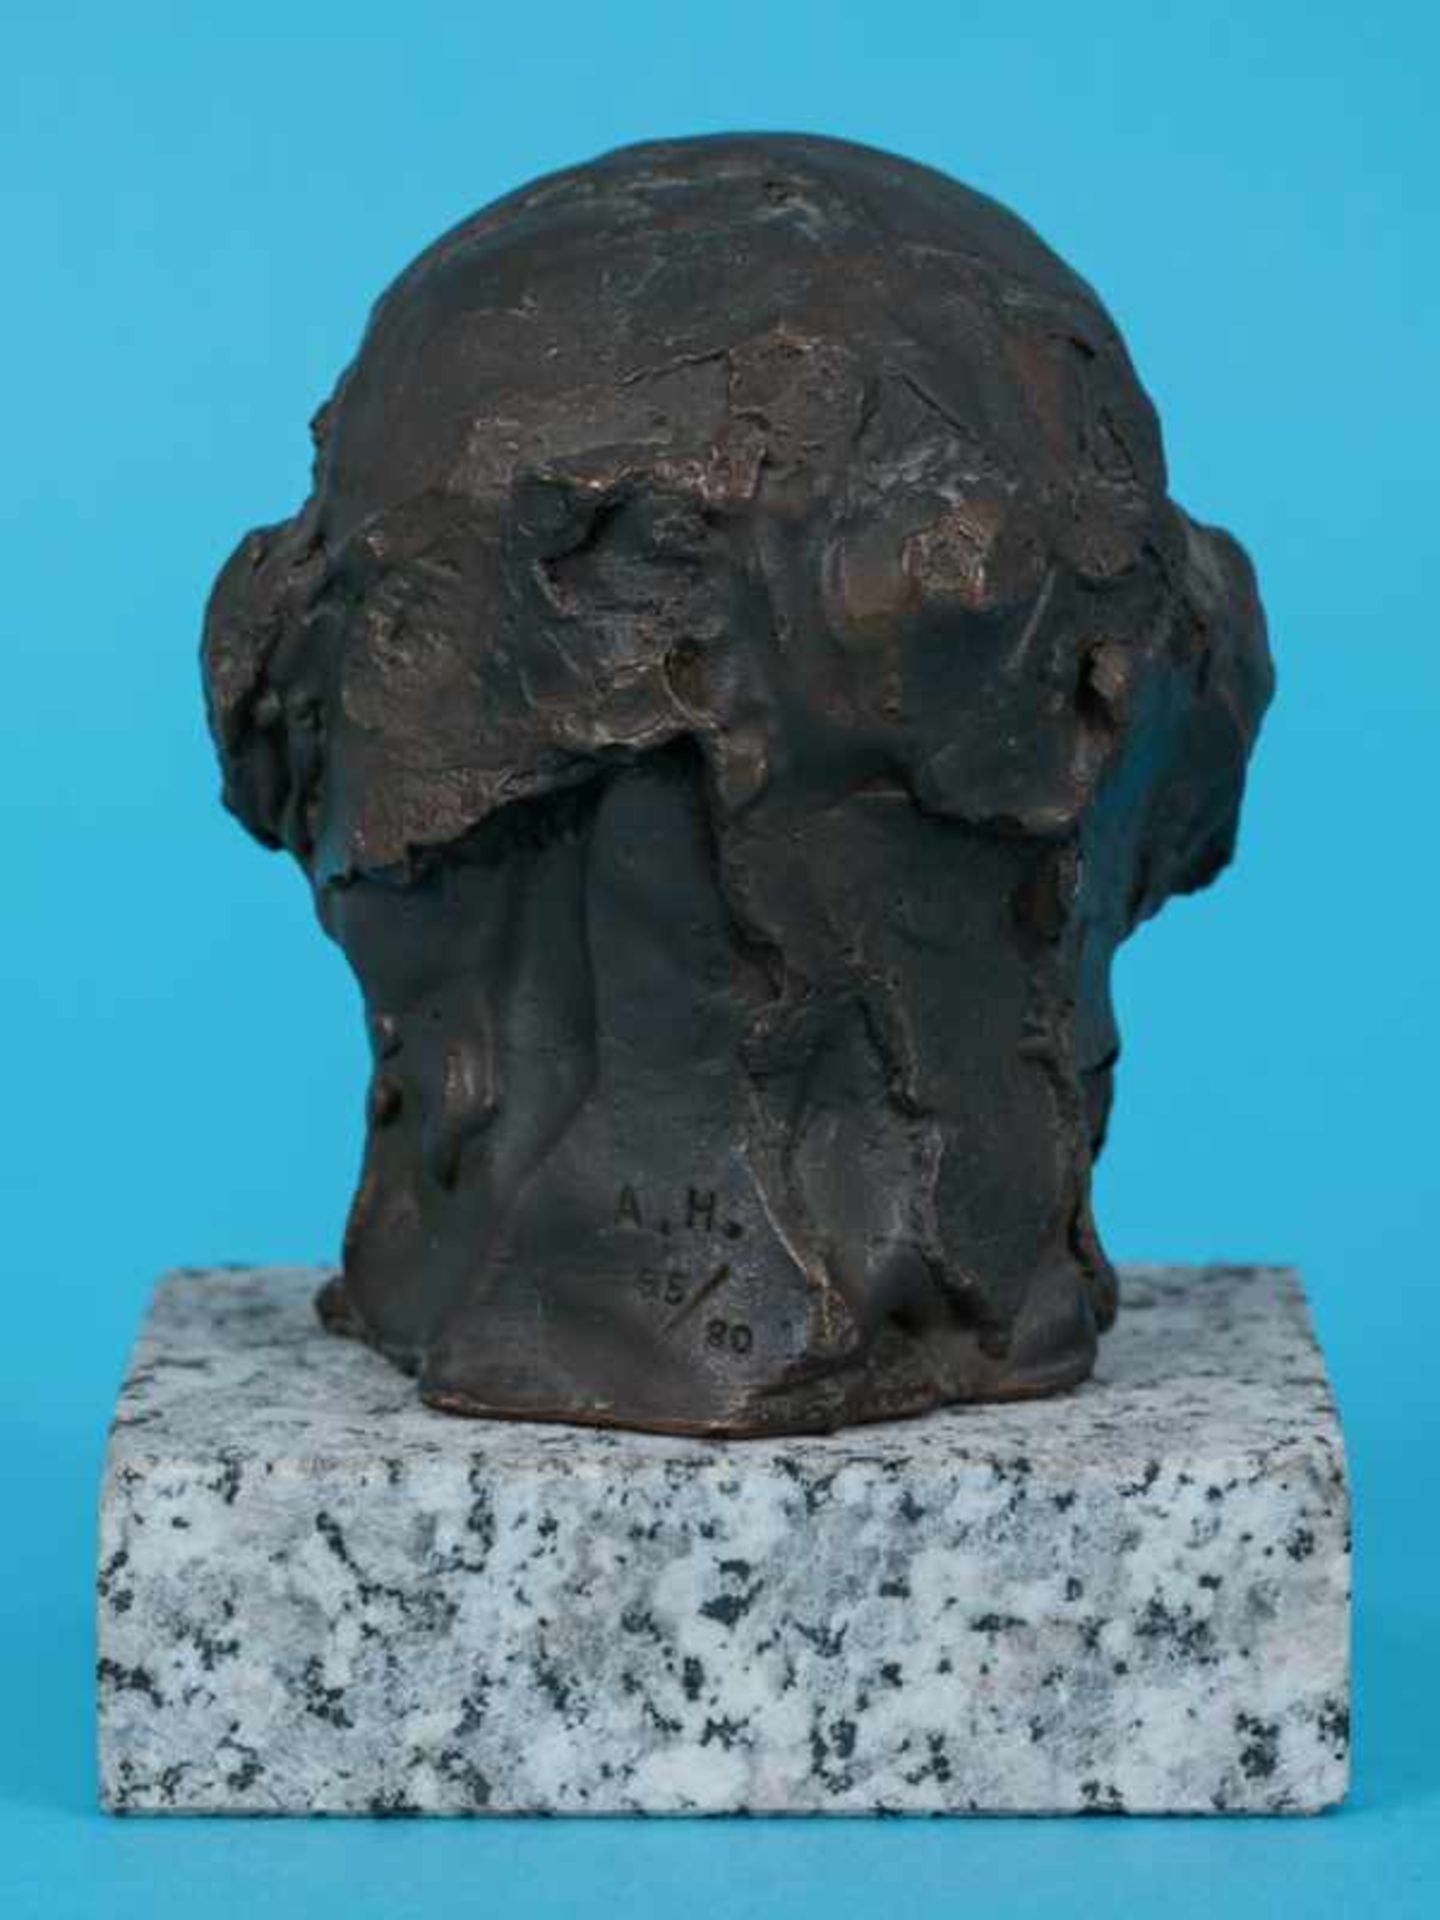 Hrdlicka, Alfred (1928 - 2009). Bronzeplastik "Selbstportrait", ca. 1986; Kopfplastik, innen hohl - Bild 7 aus 9